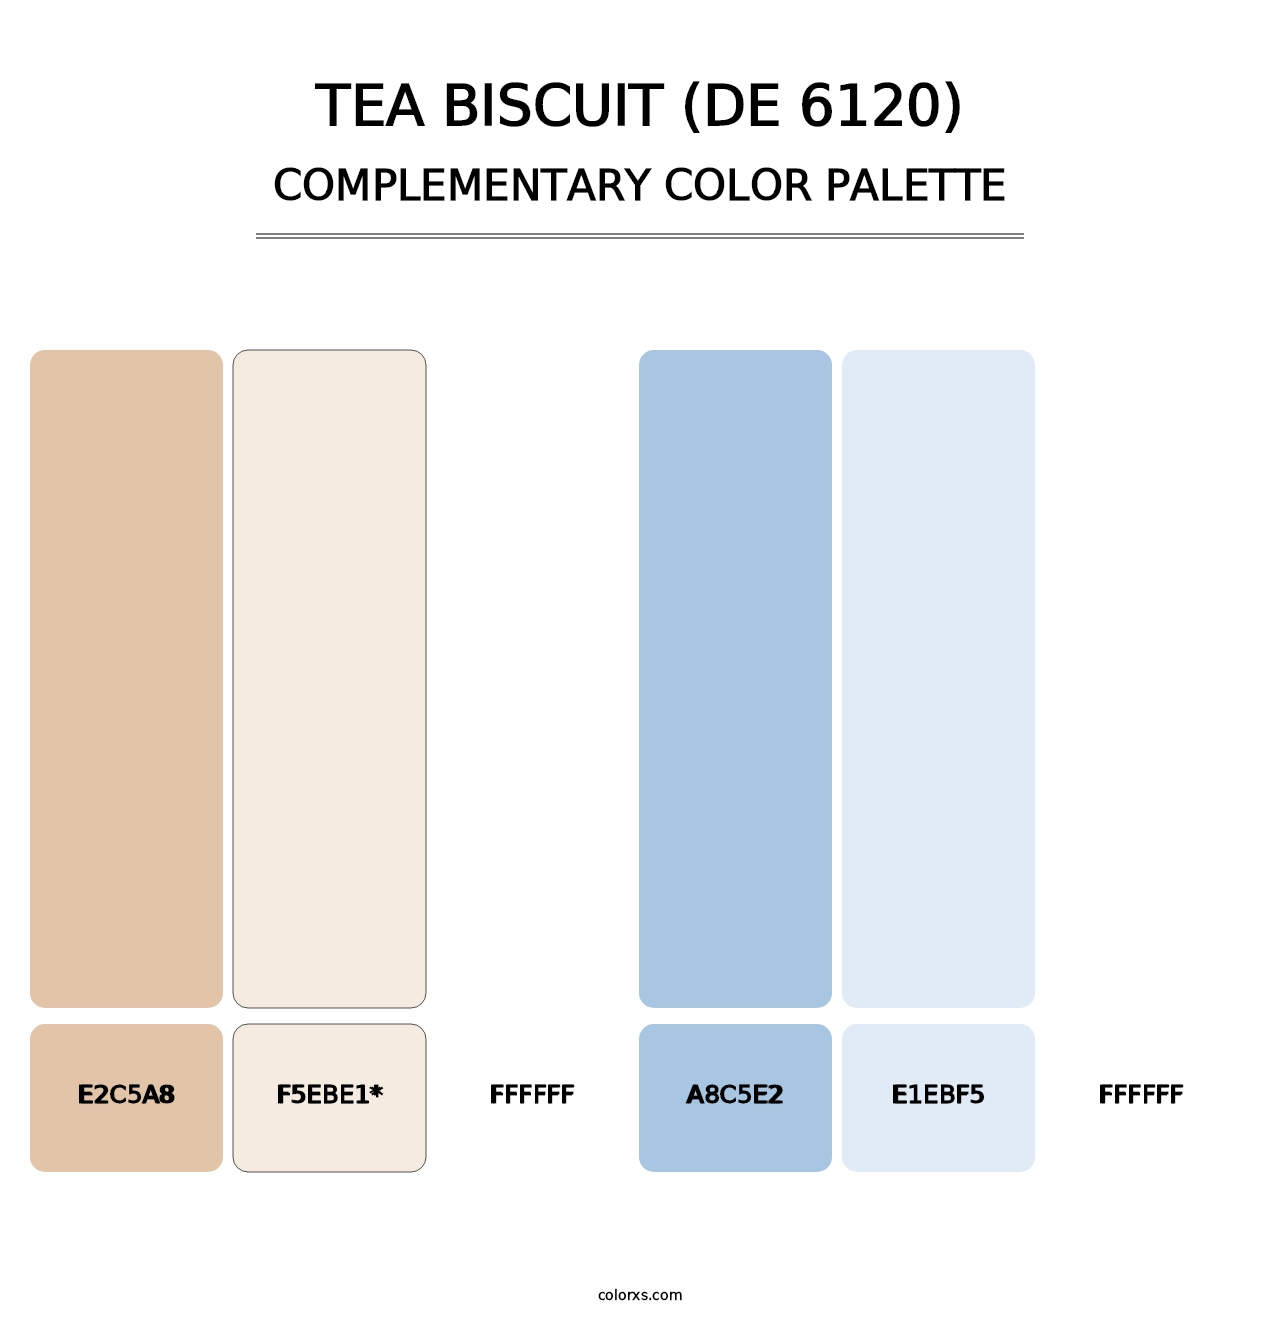 Tea Biscuit (DE 6120) - Complementary Color Palette